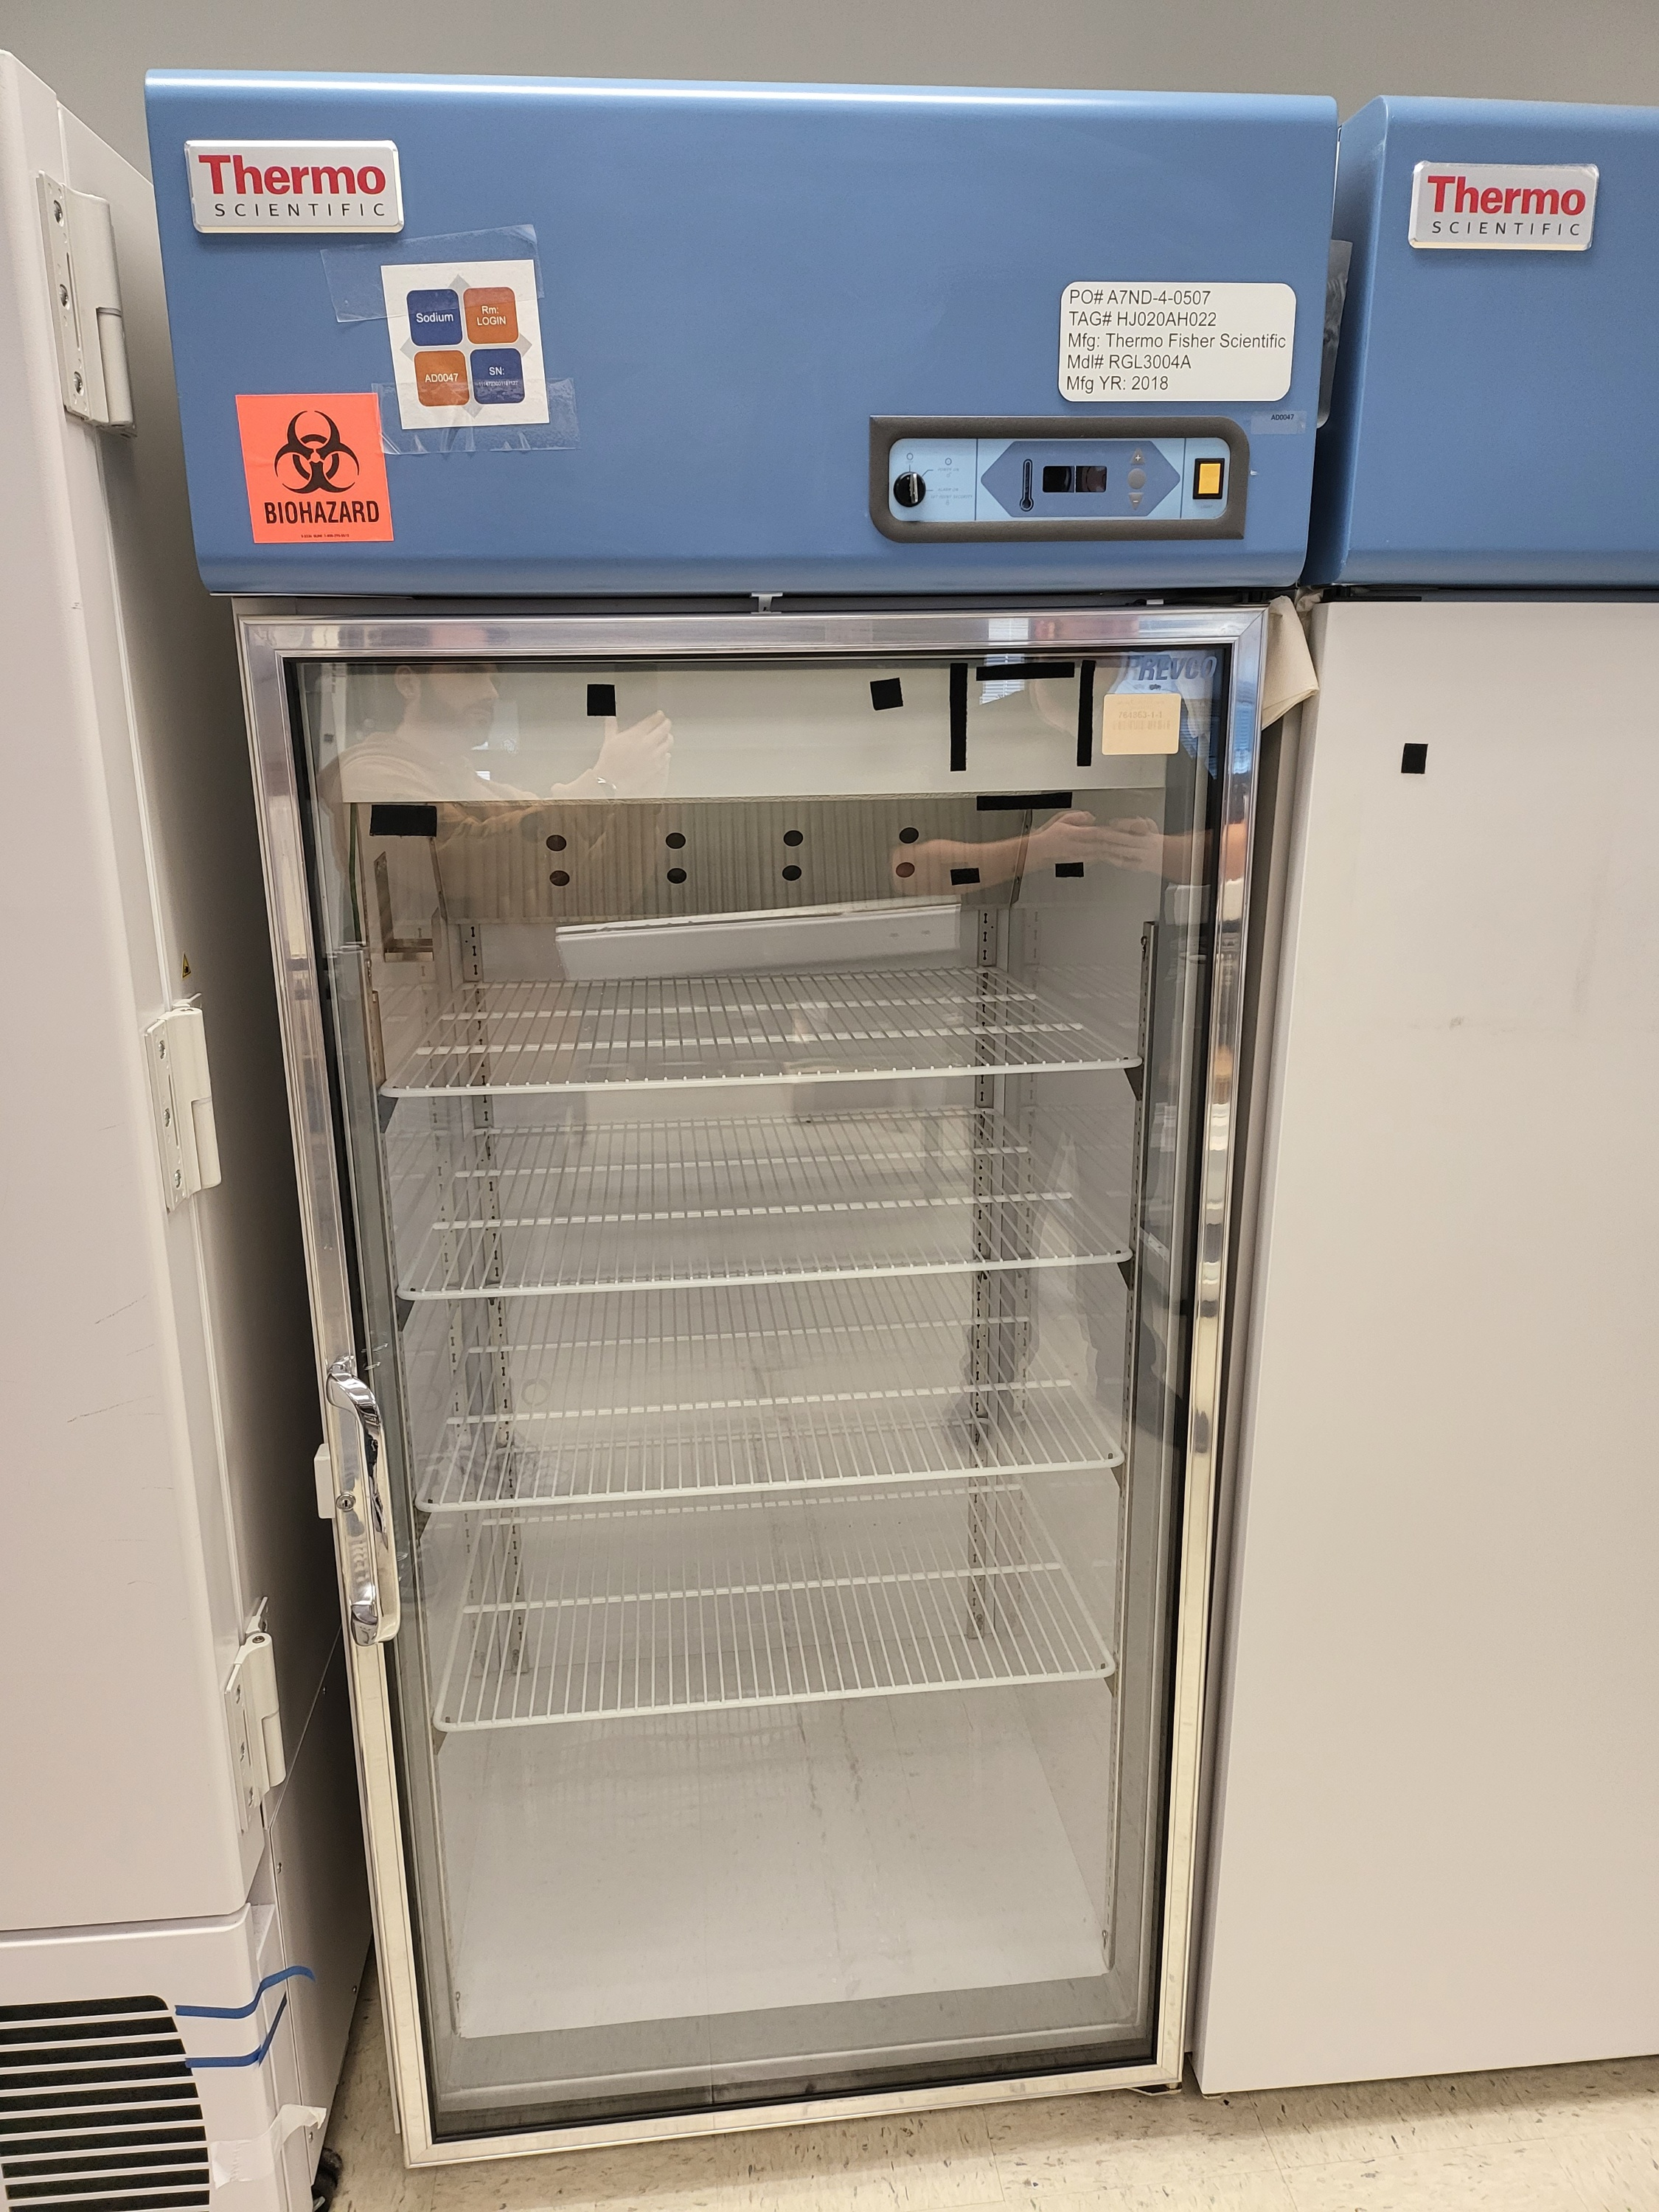 Thermo Revco RGL3004A Lab Refrigerator (2018)